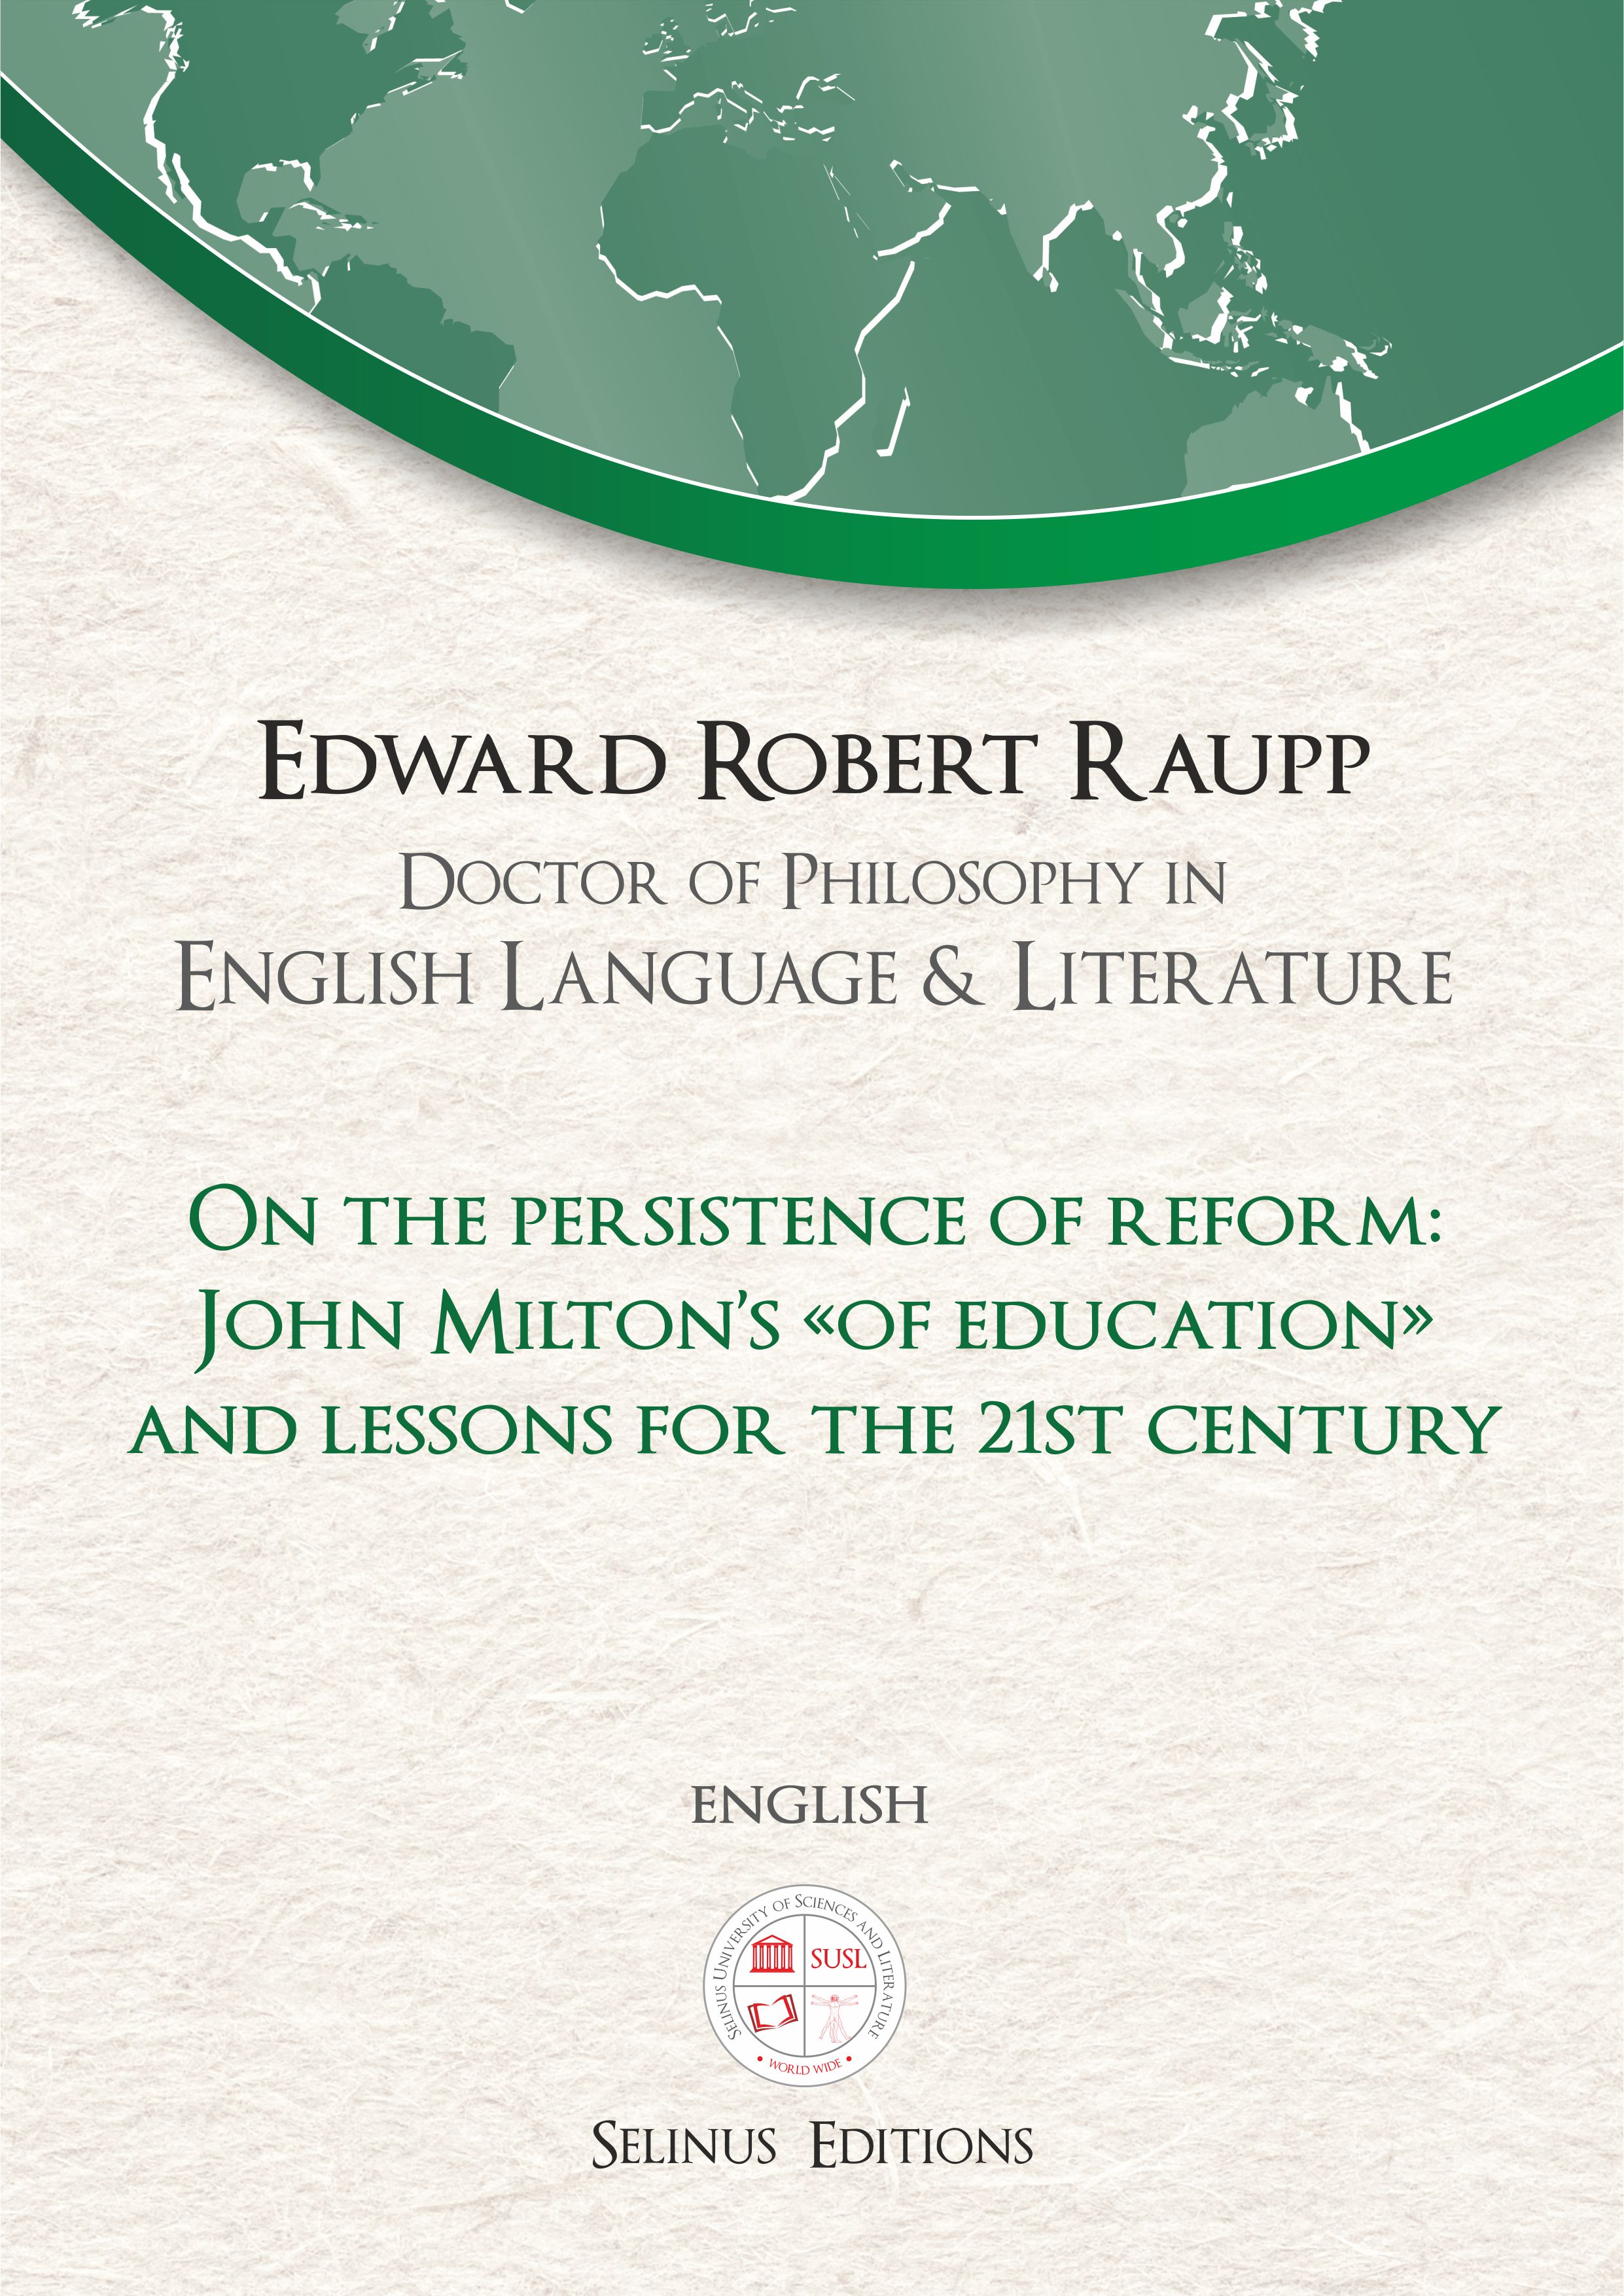 Thesis Edward Robert Raupp